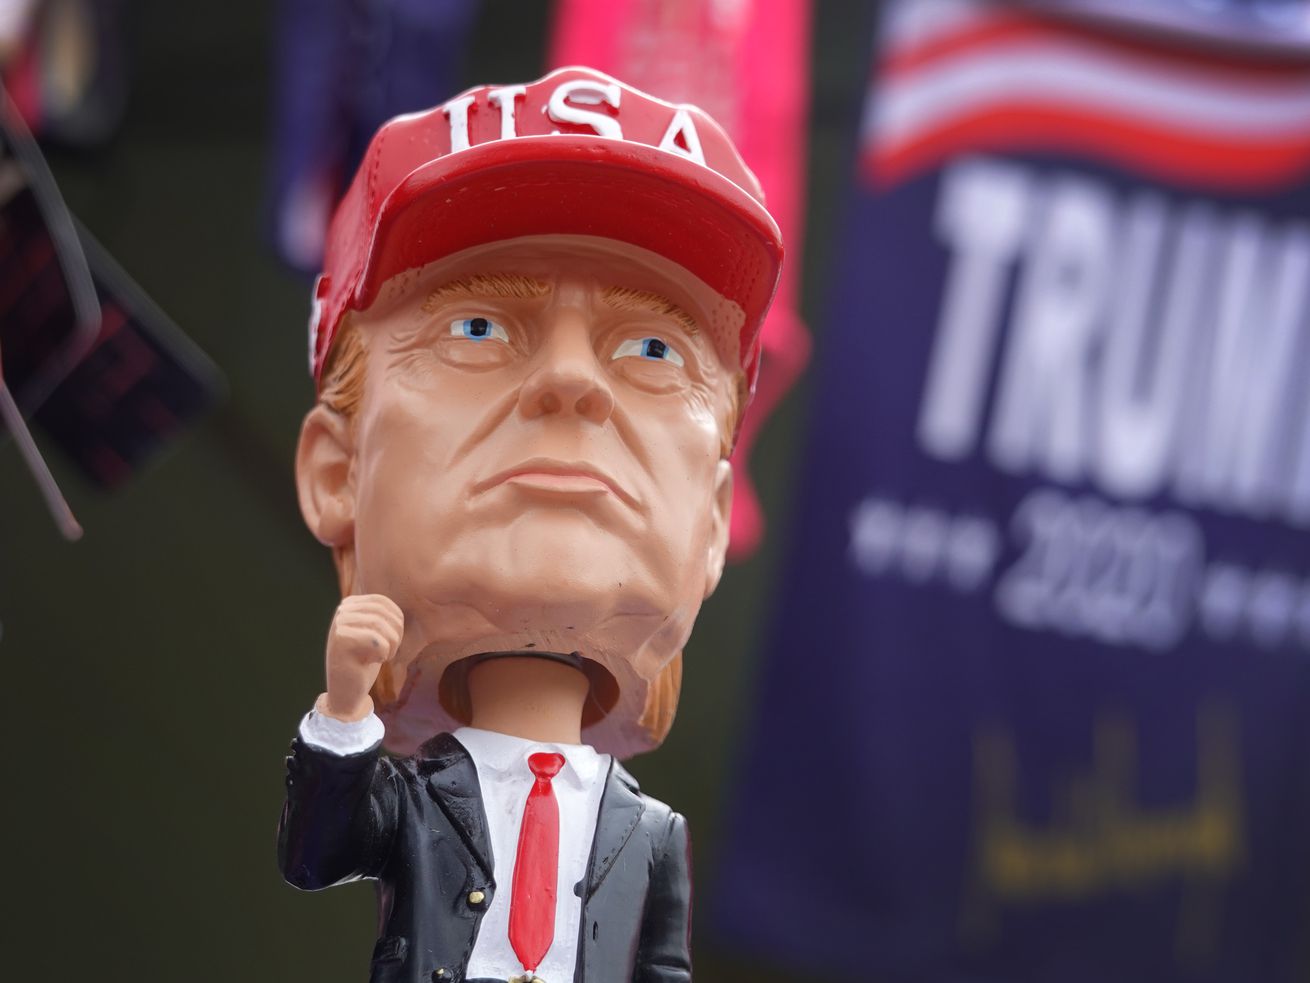 A Trump bobblehead wearing a USA cap.